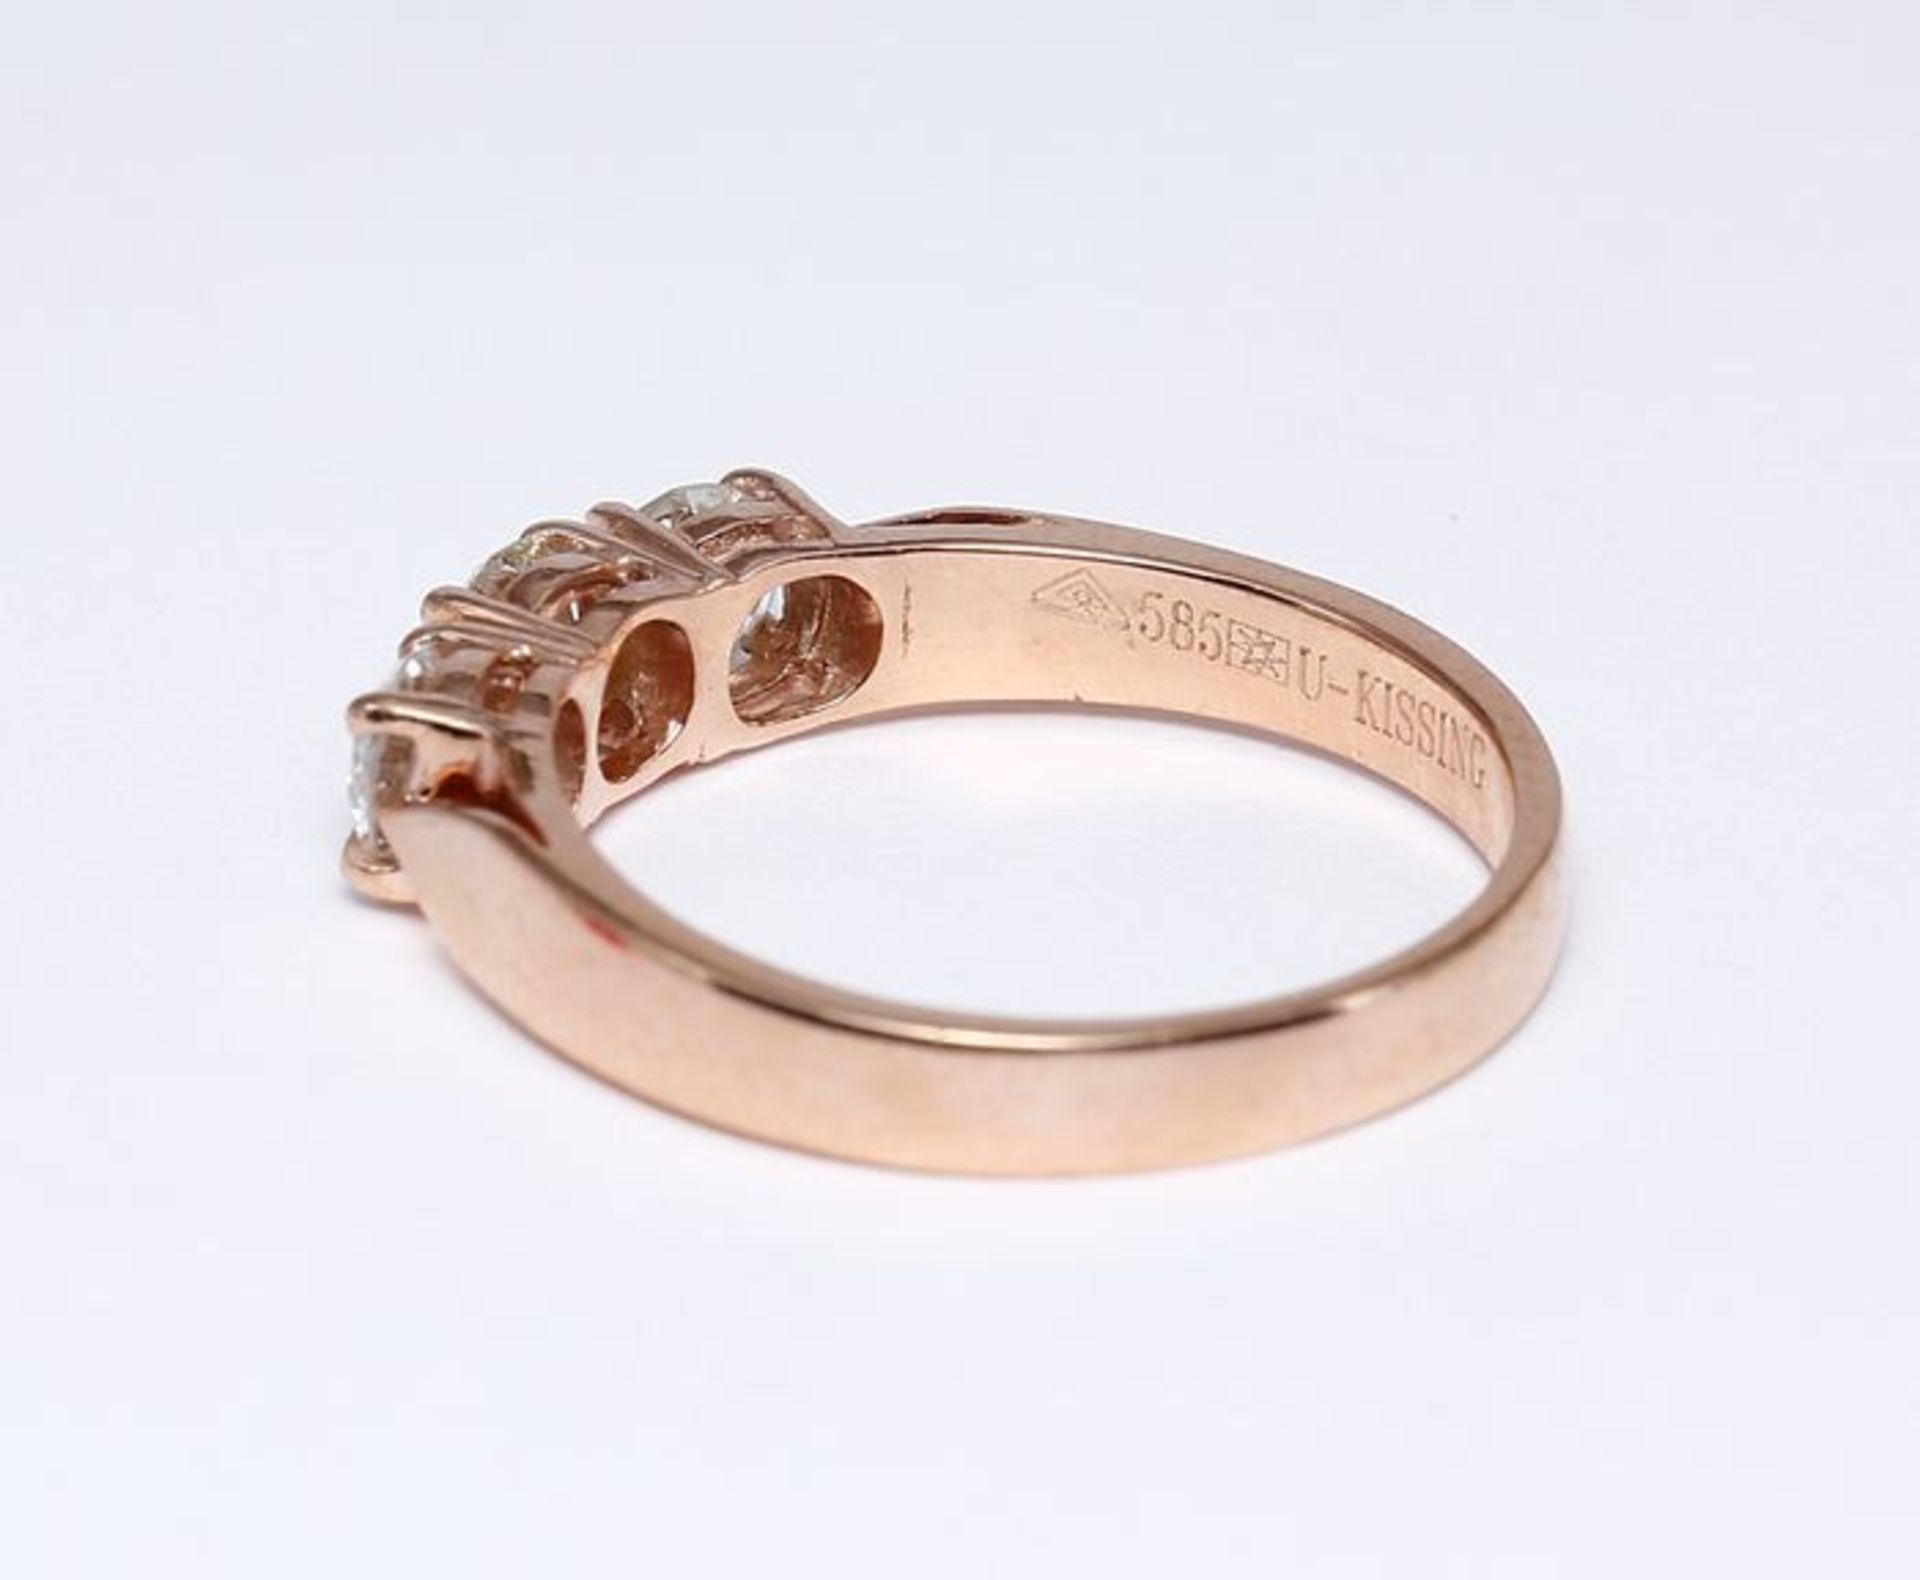 IGI Certified 14 K / 585 Rose Gold Trilogy Solitaire Diamond Ring - Image 6 of 6